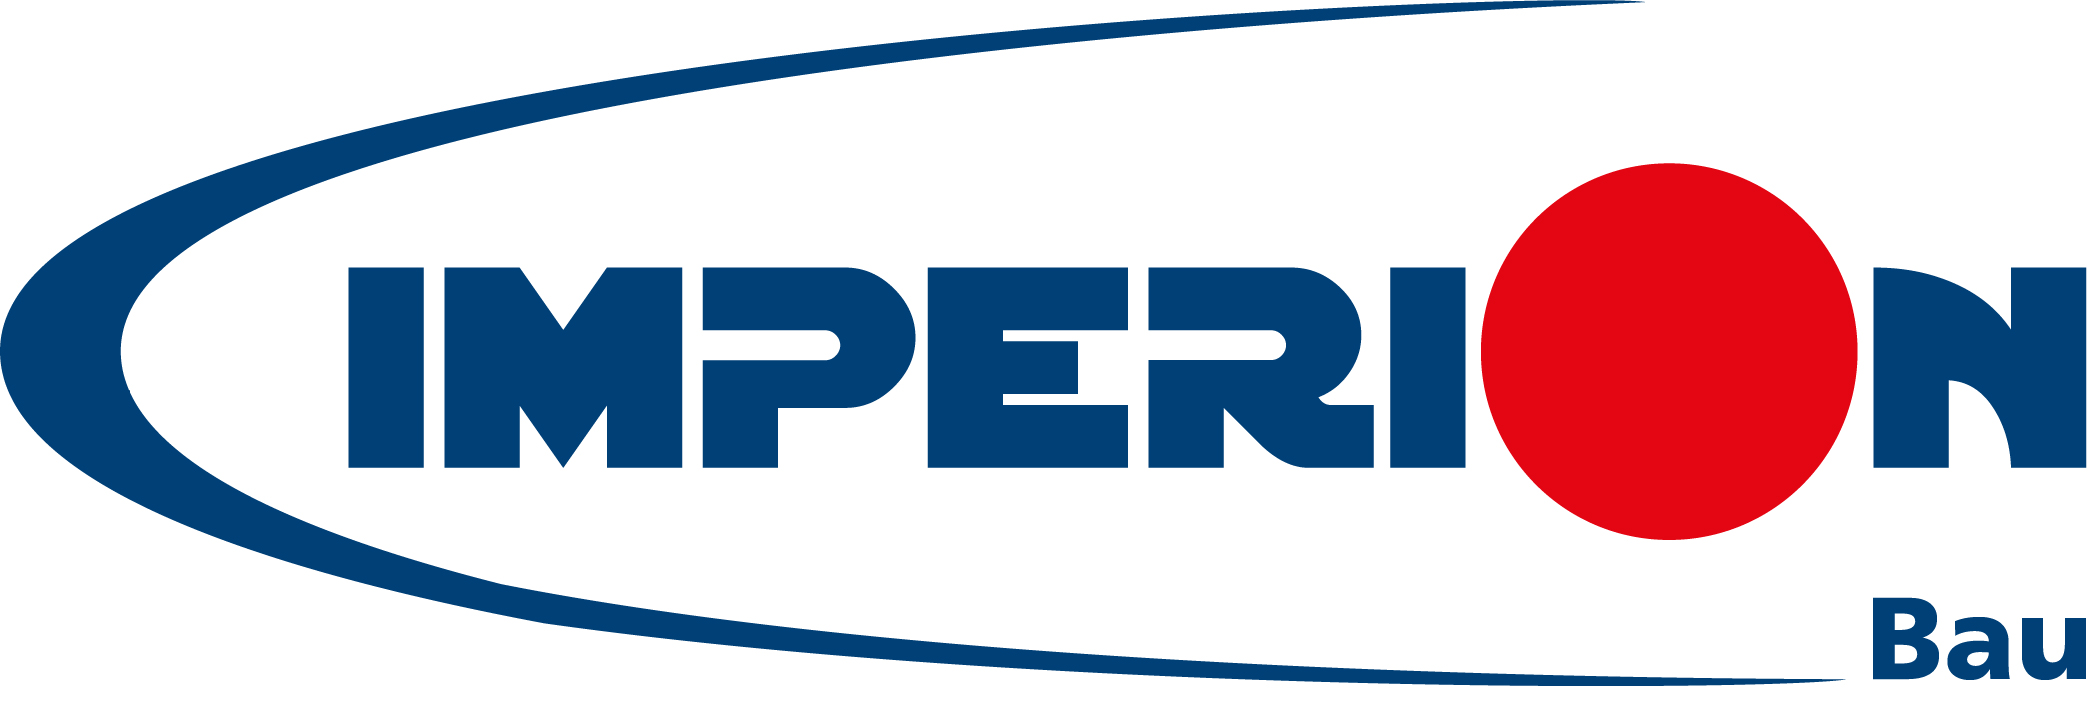 Imperion - Logo